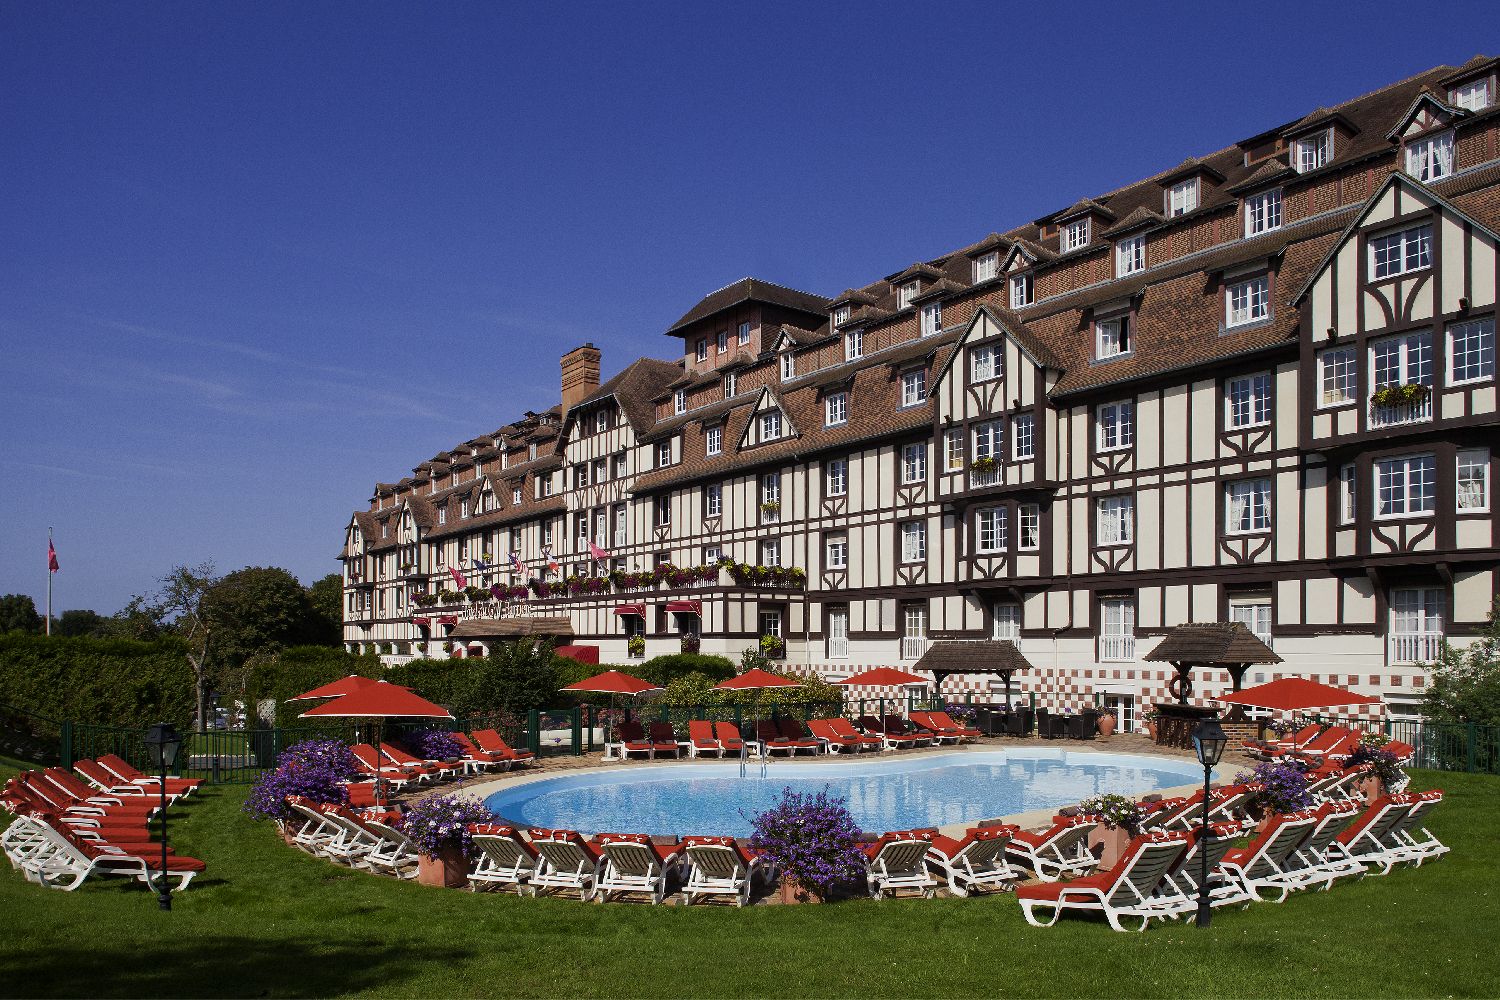 golf-expedition-golf-reizen-frankrijk-regio-normandië-hotel-du-golf-barriere-entree-luxe-hotel-zwembad-met-ligbedden-parasol.jpg